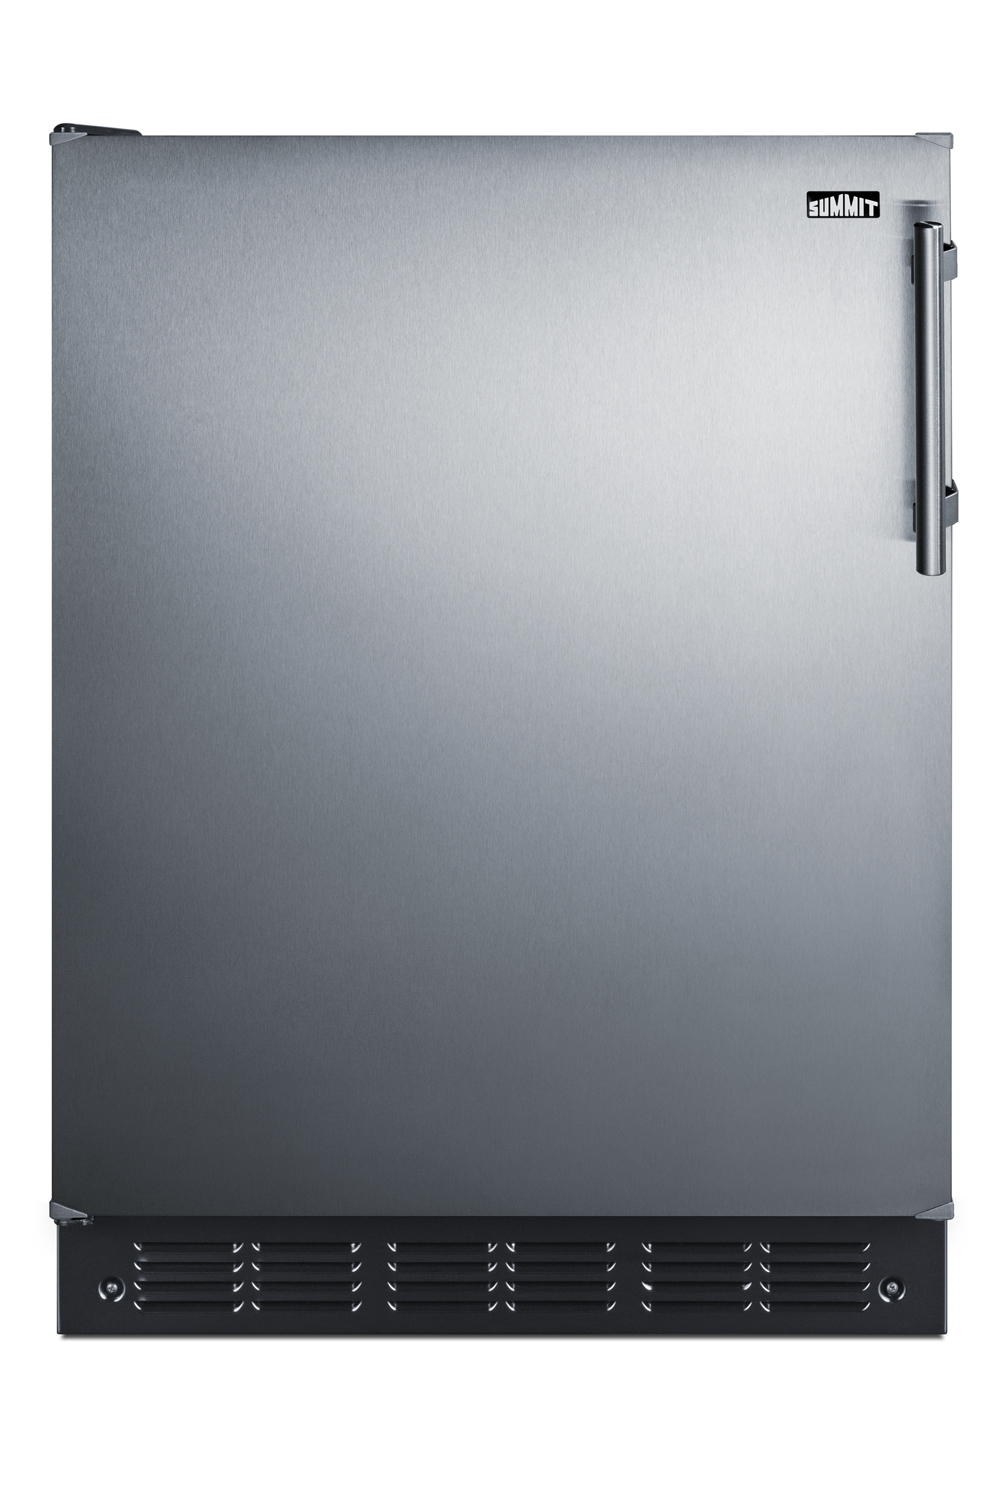 Summit 24" Wide All-Refrigerator, ADA Compliant